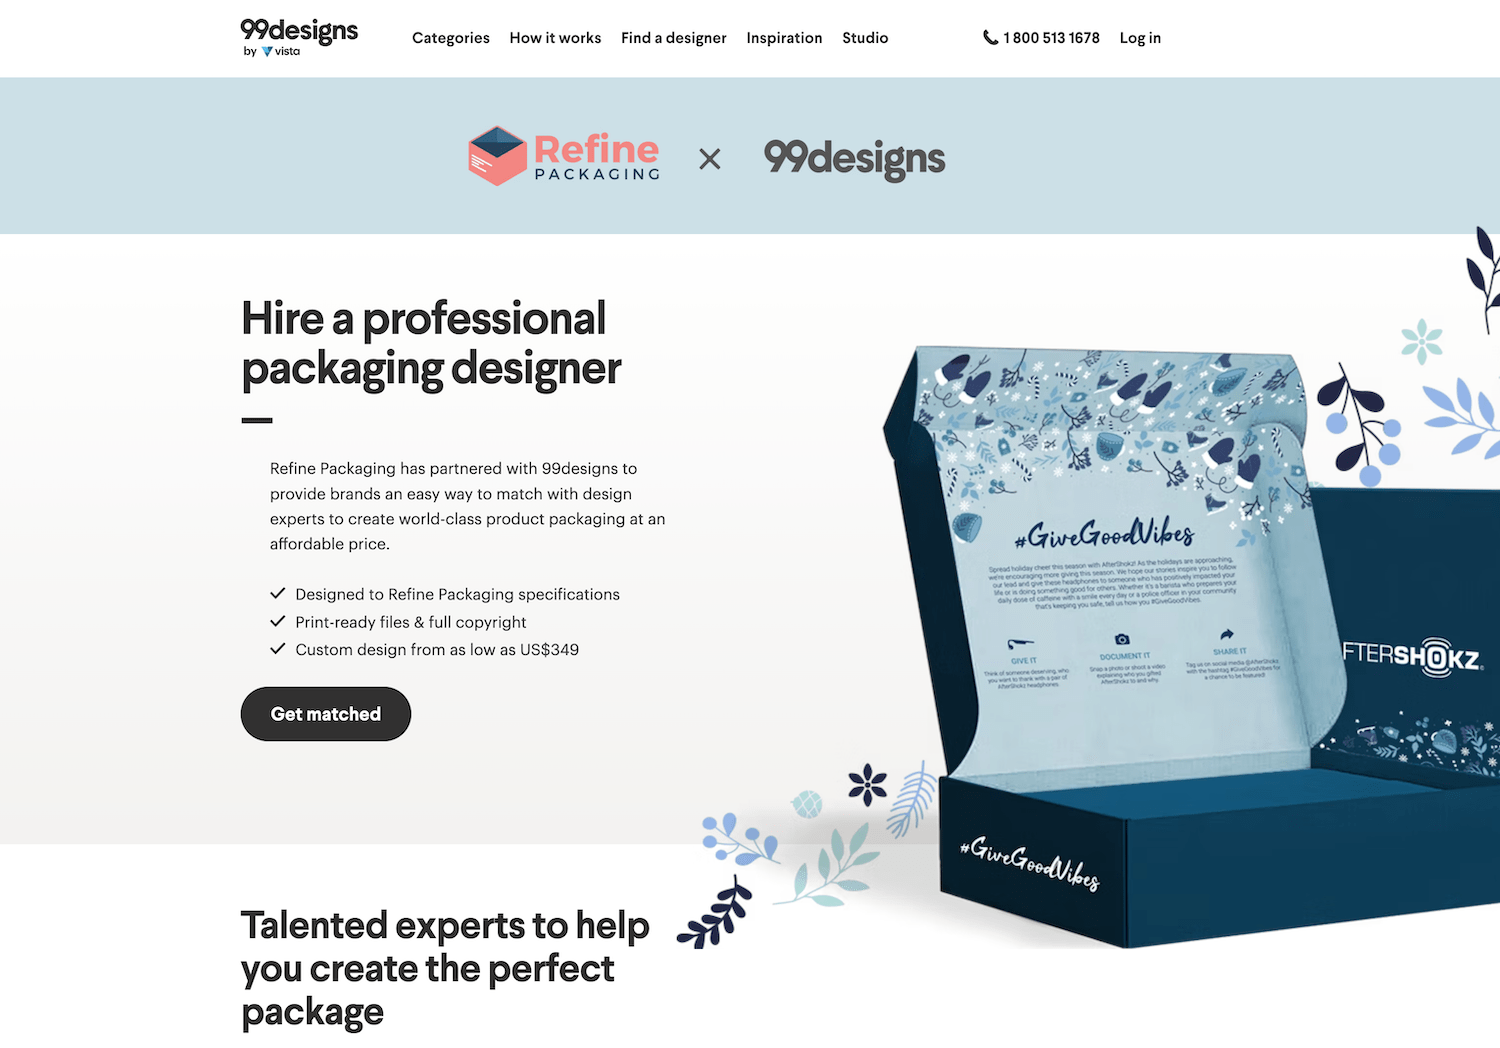 99designs refine packaging partner for package design